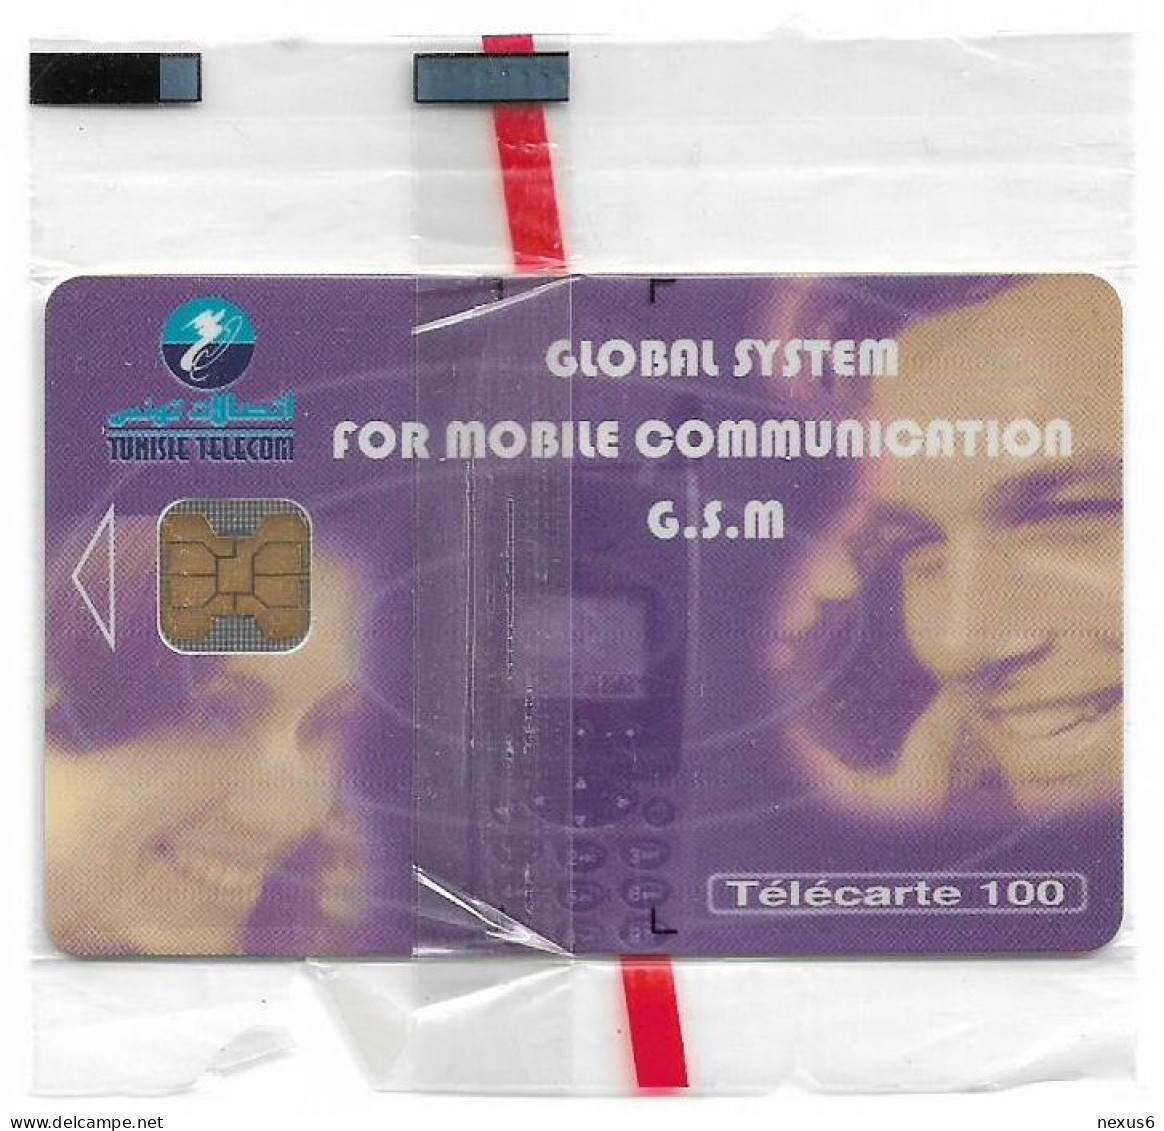 Tunisia - Tunisie Telecom - Global System For Mobile Comm., 100Units, Chip Oberthur, 01.2000, 30.000ex, NSB - Tunisia